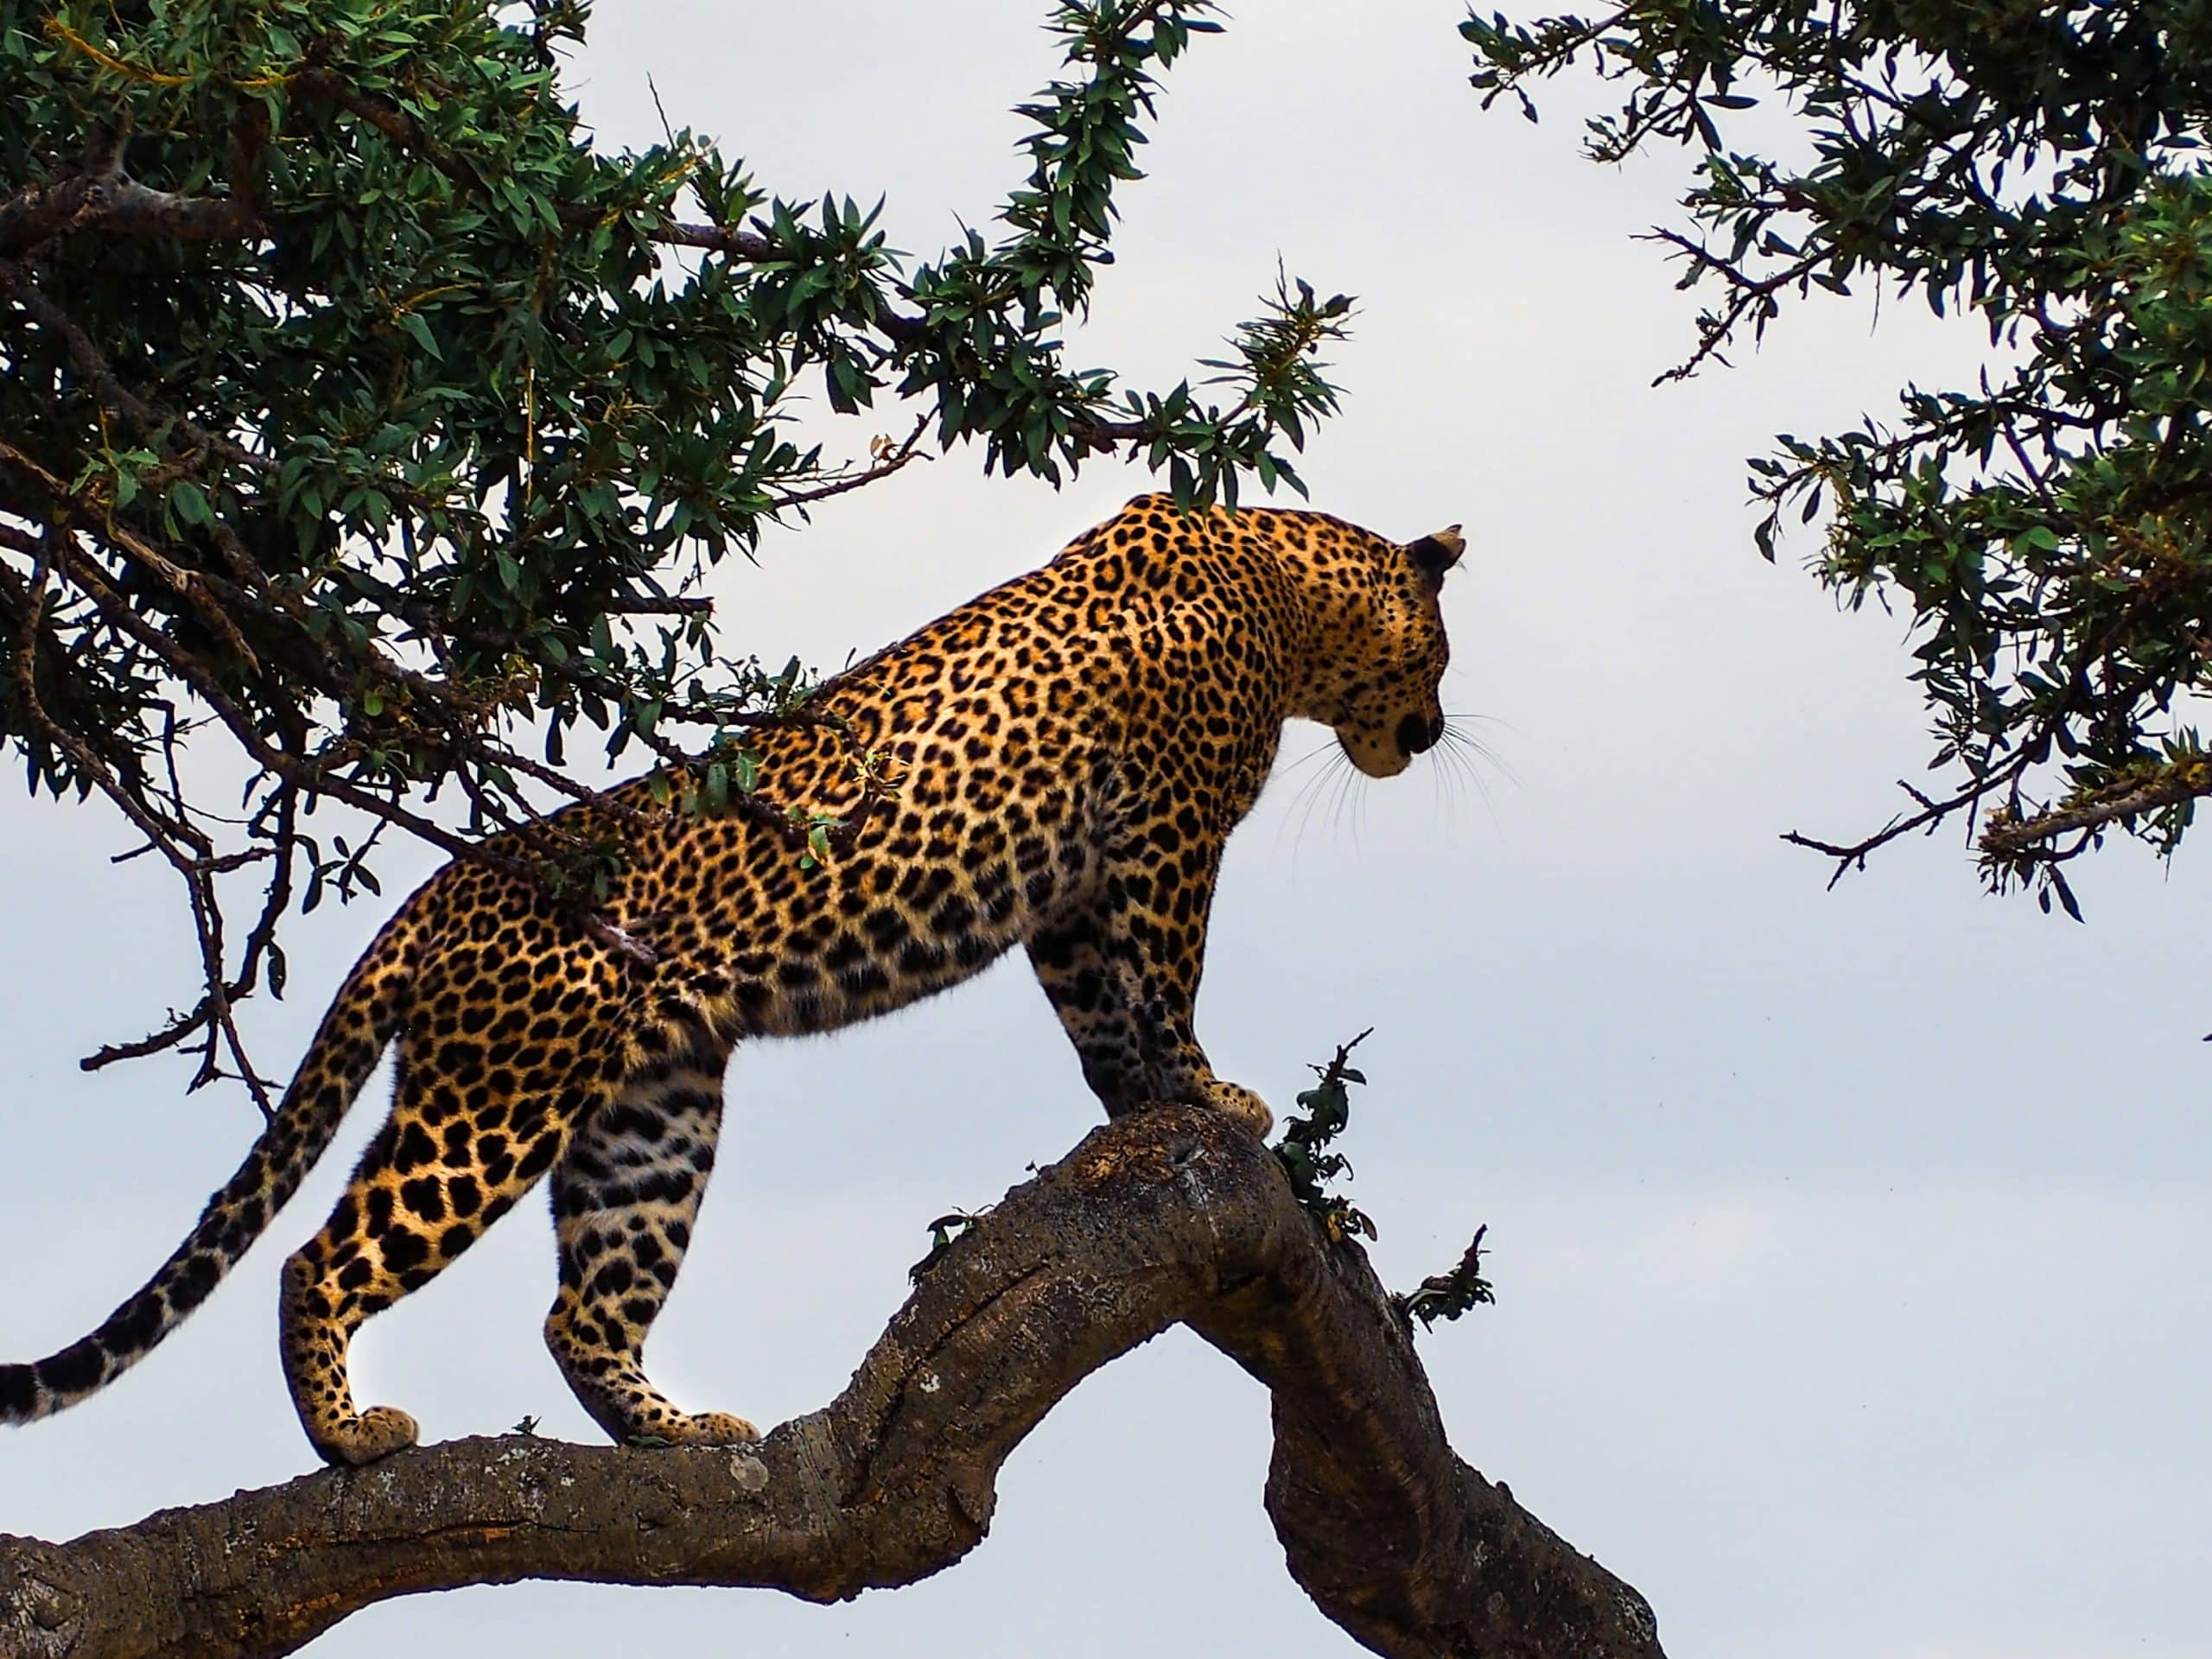 réserve masai mara safari eco-responsable influence responsable wagram et vous